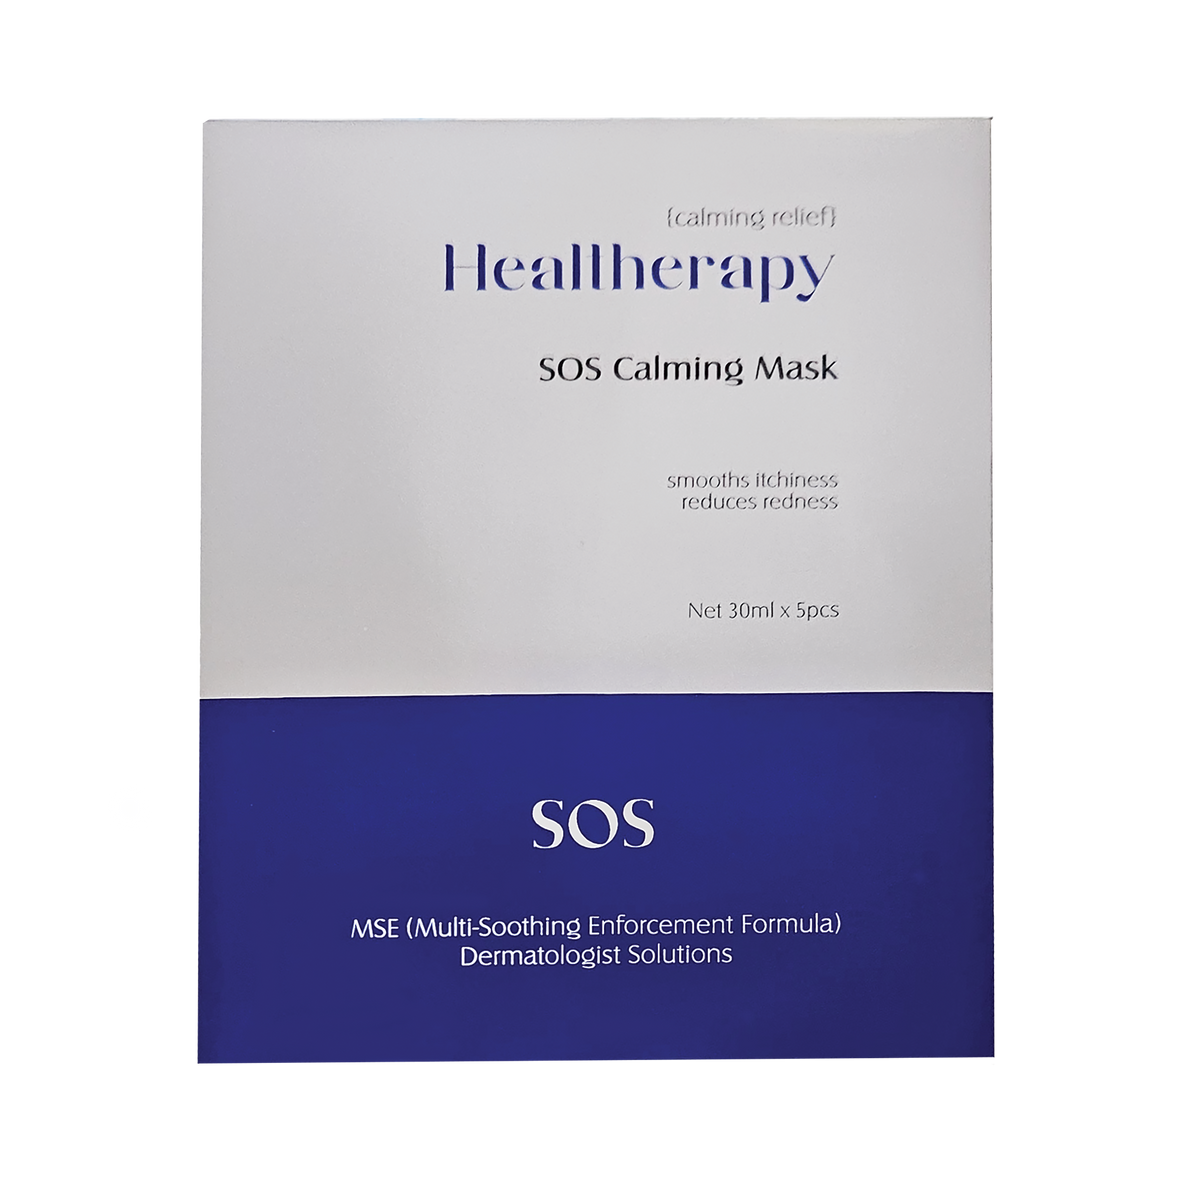 Healtherapy SOS 降敏降紅面膜 SOS Calming Mask